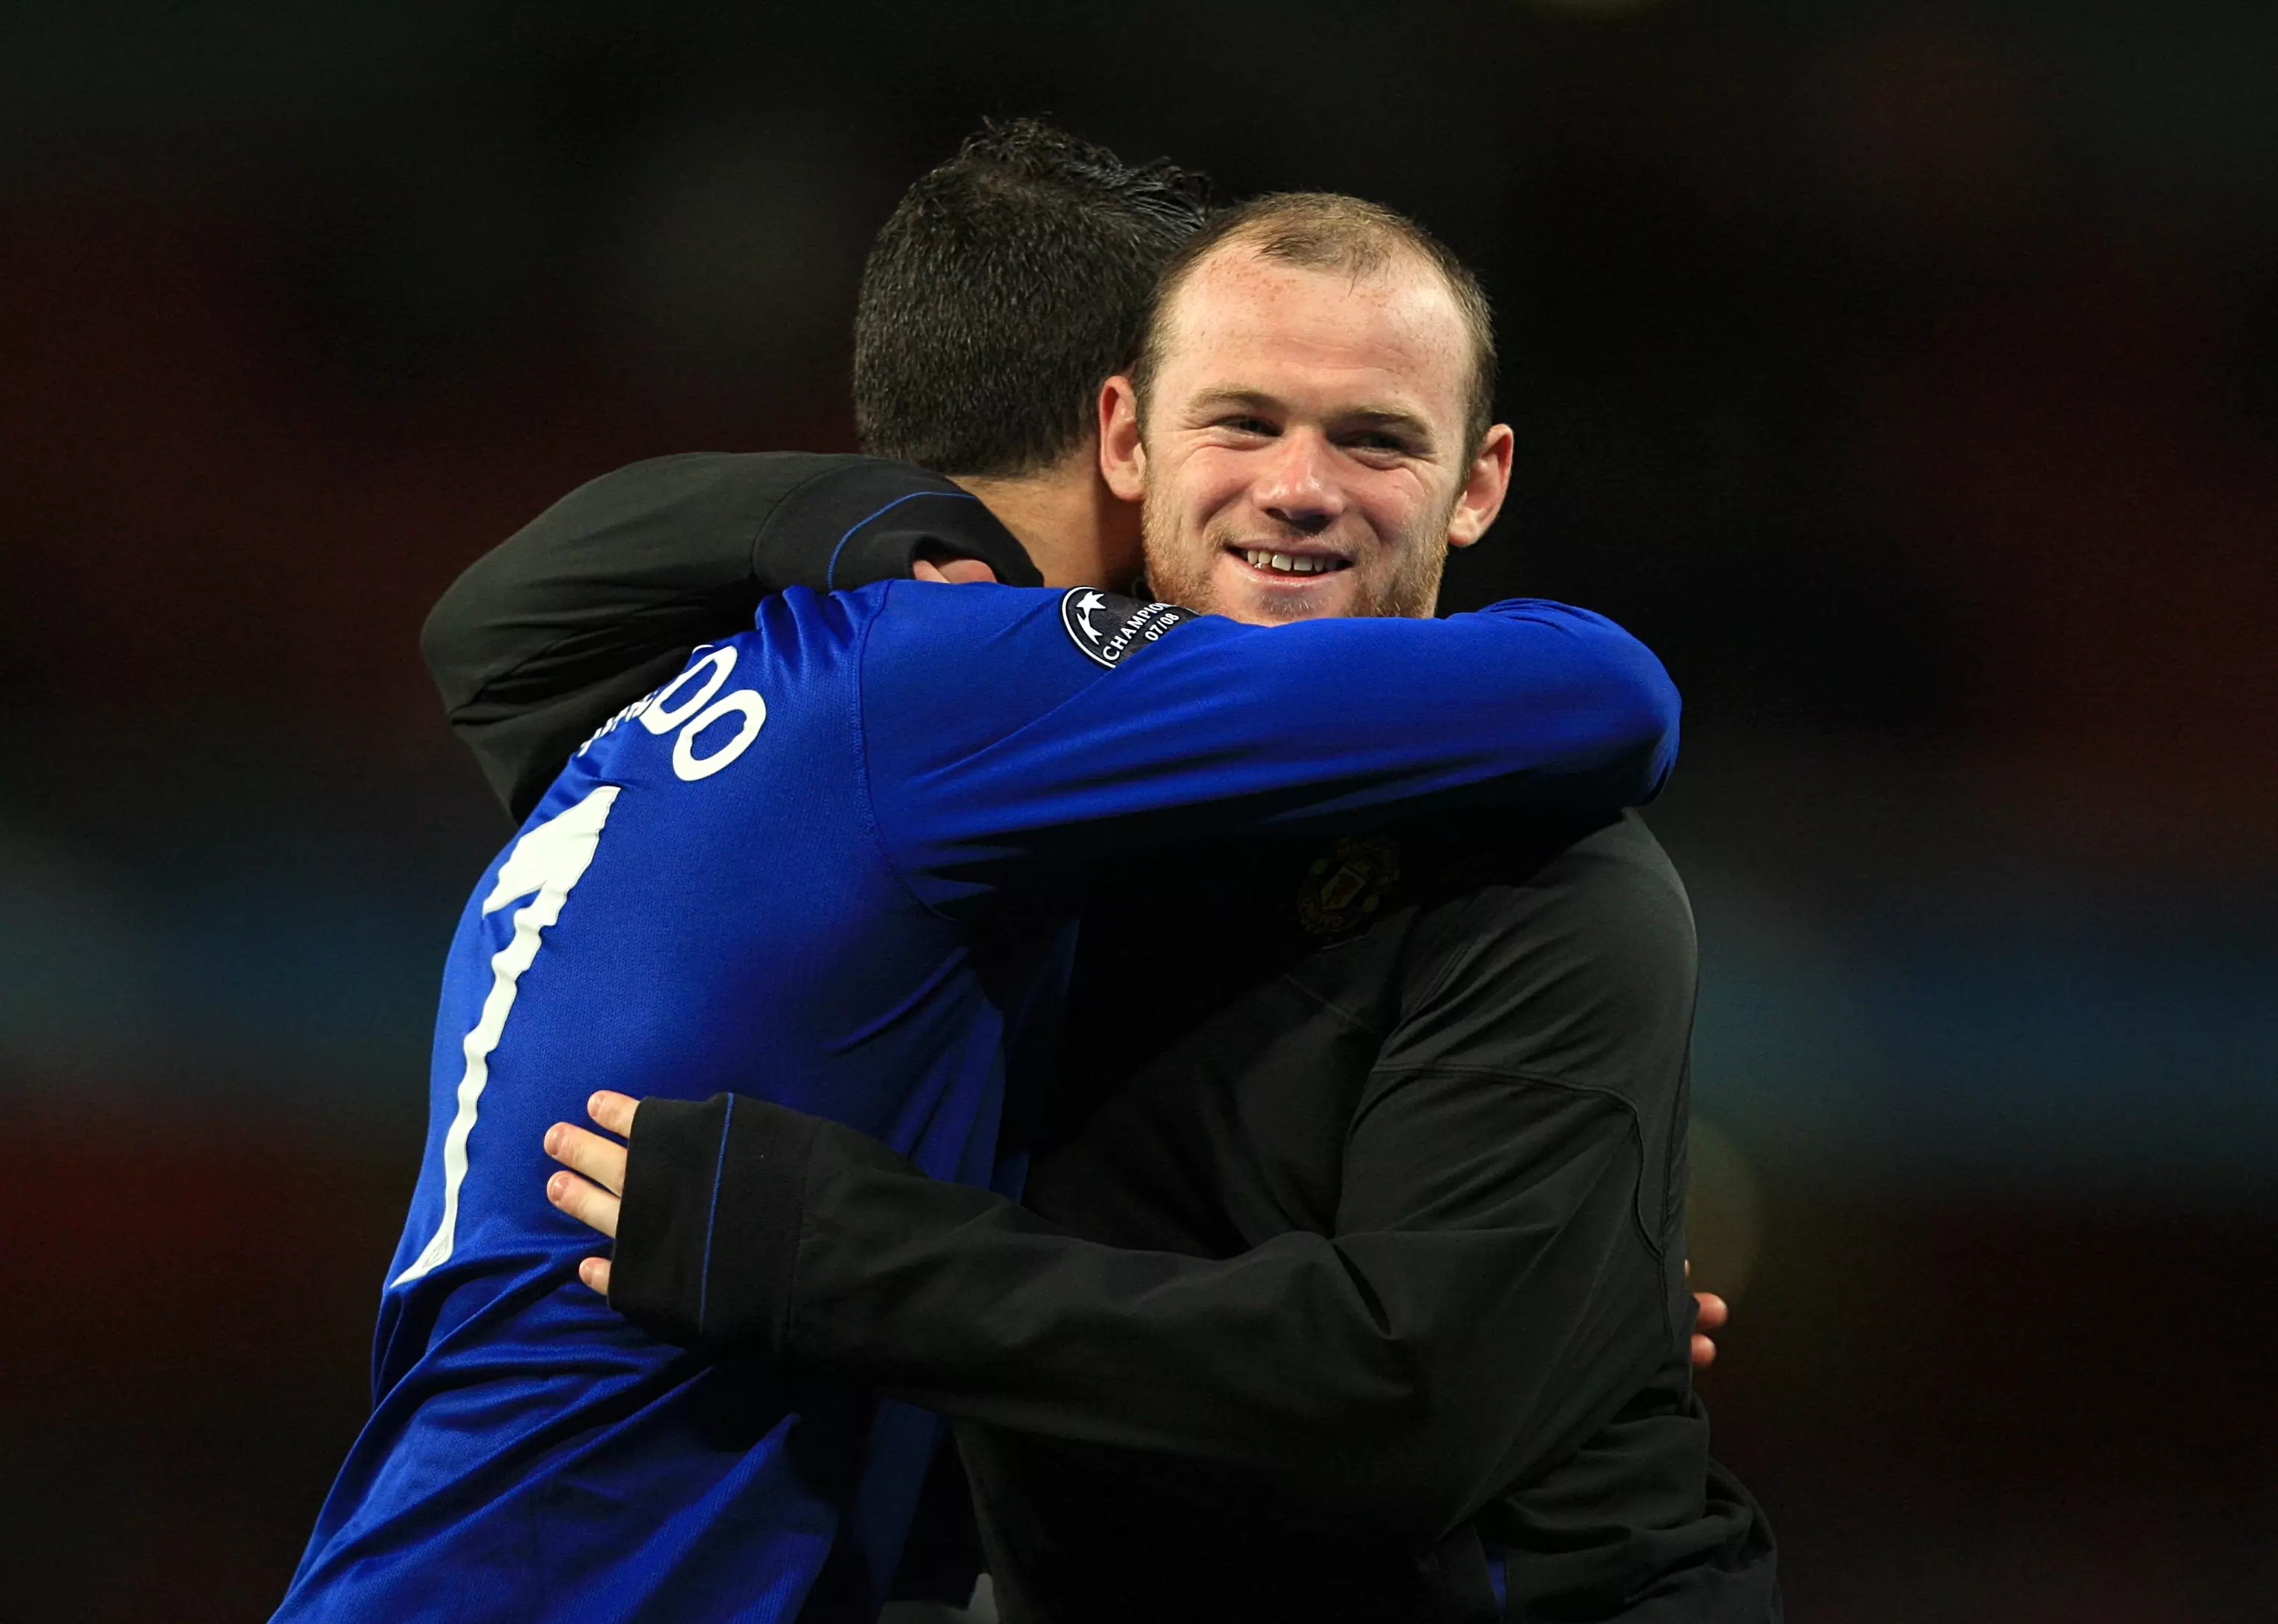 Rooney and Ronaldo embrace. Image: PA Images